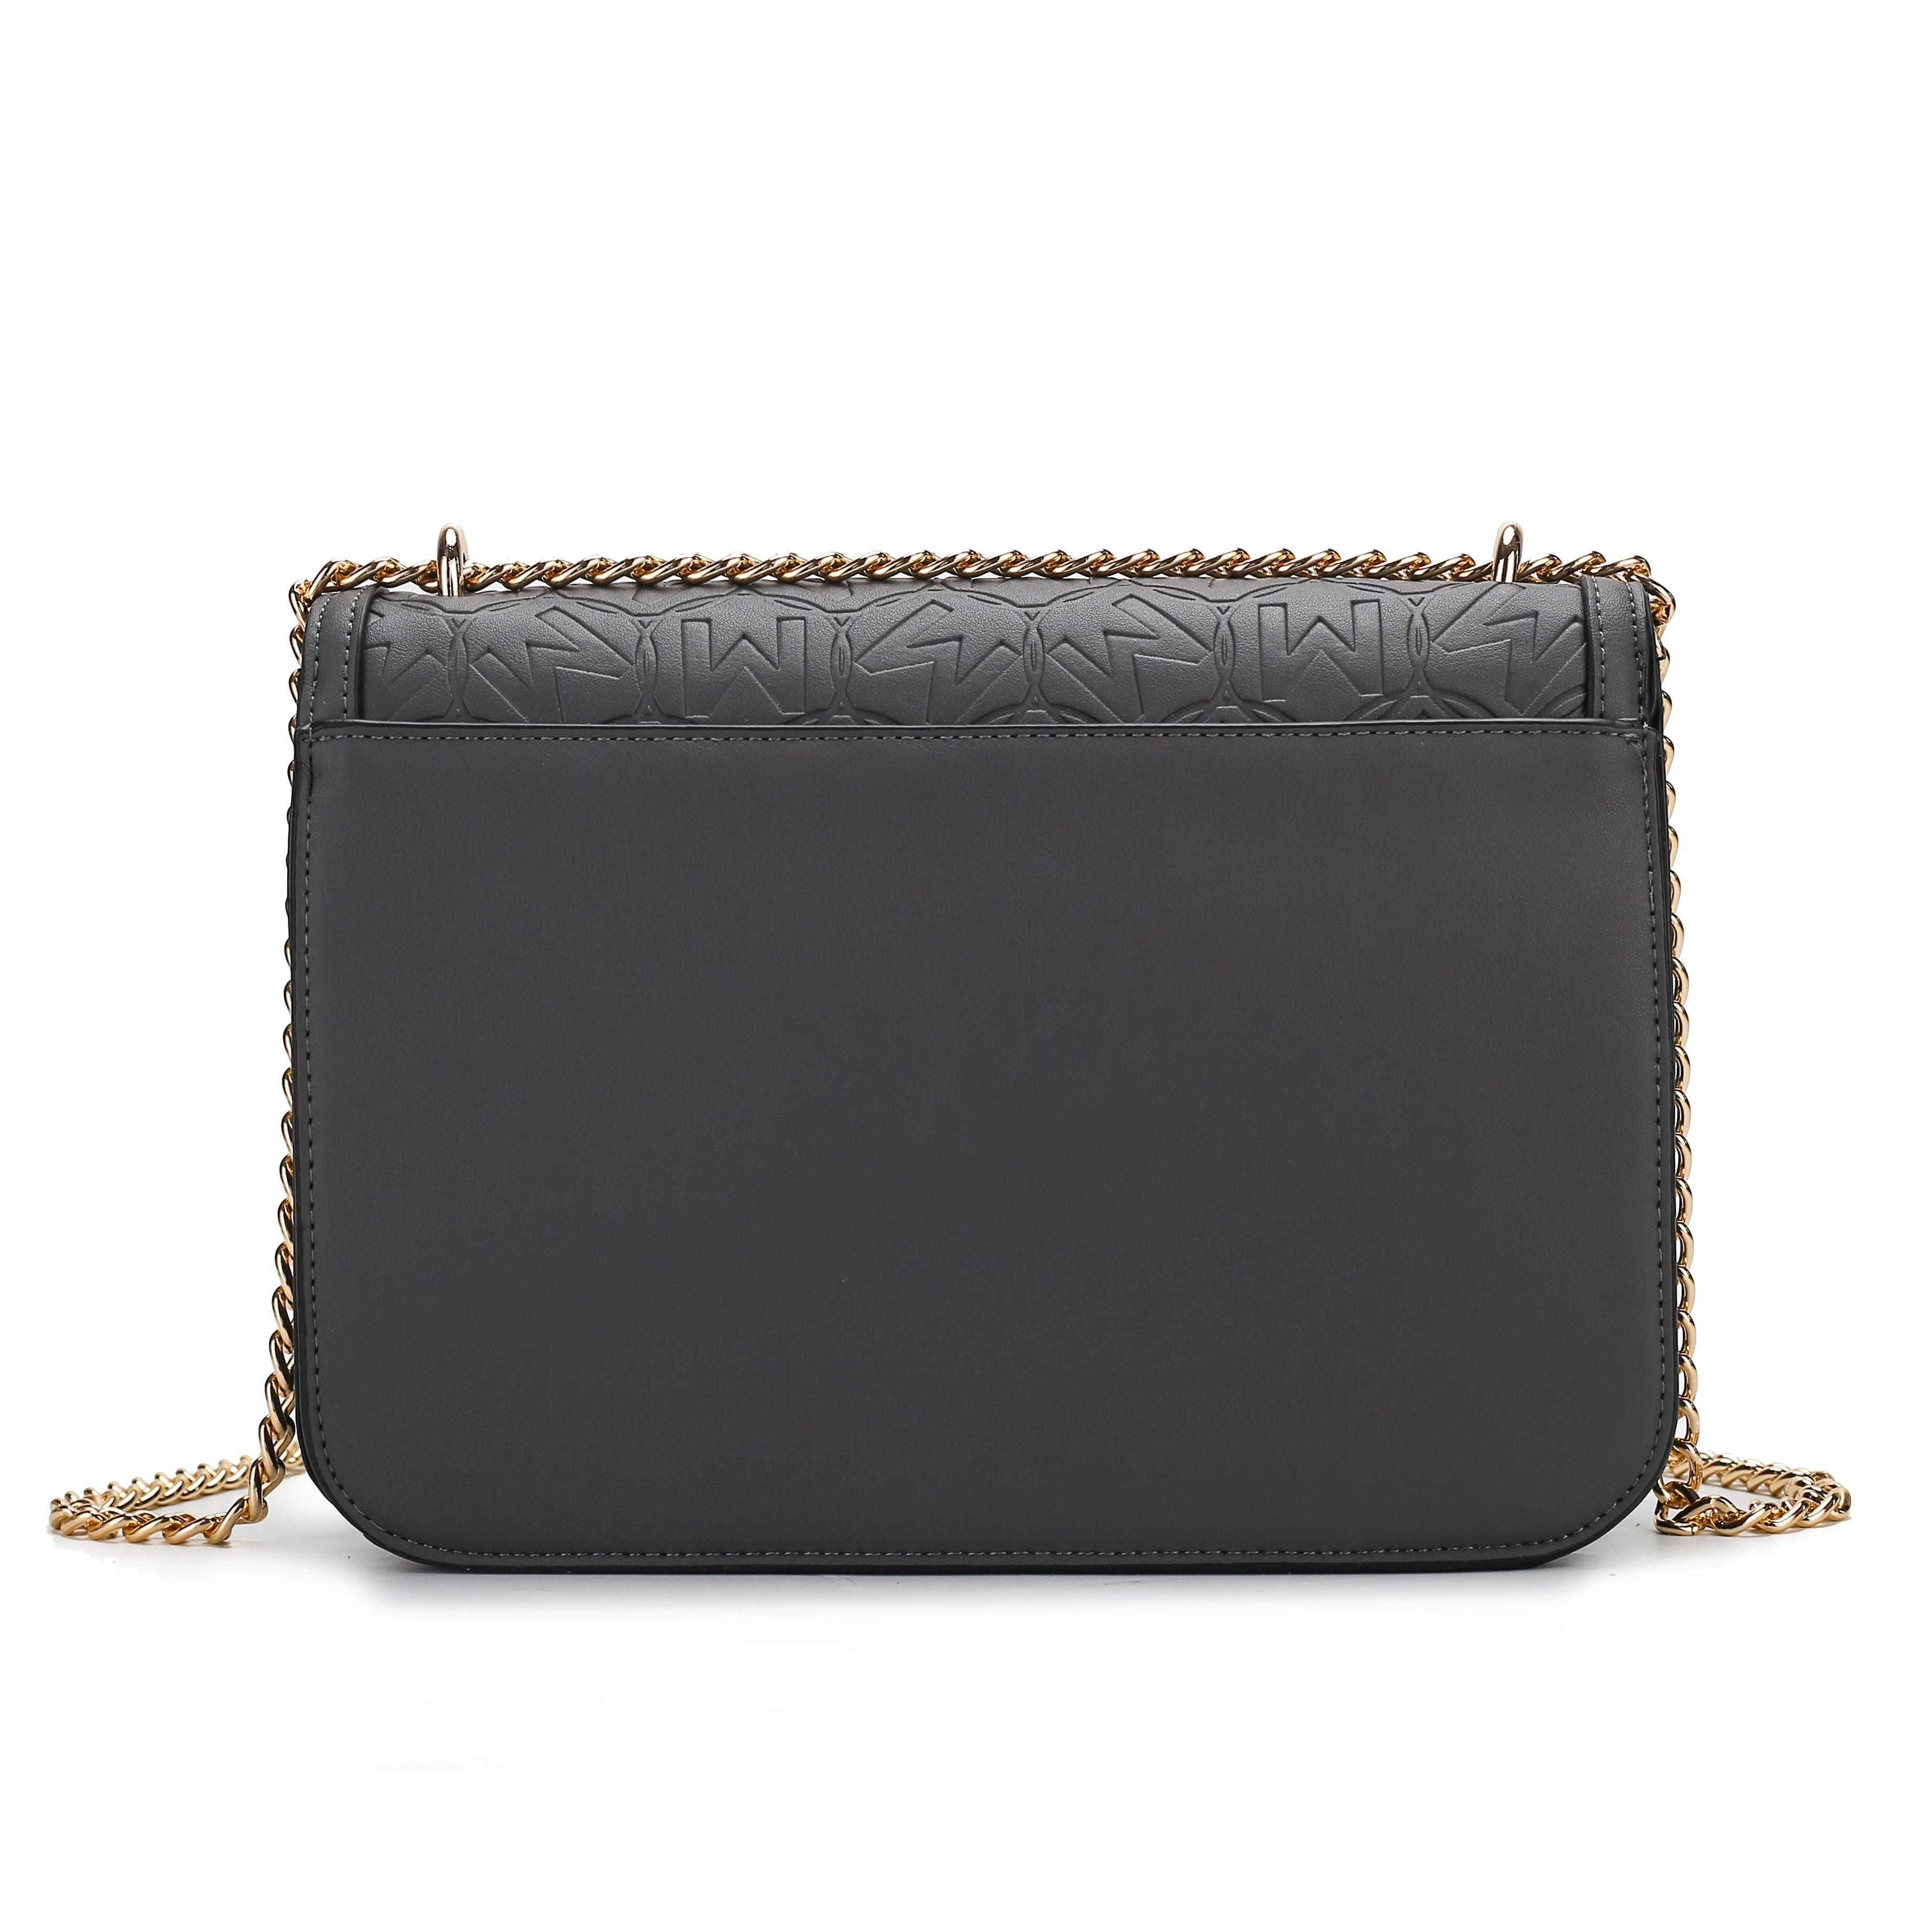 Wallets, Handbags & Accessories Amiyah Shoulder Handbag Vegan Leather Women